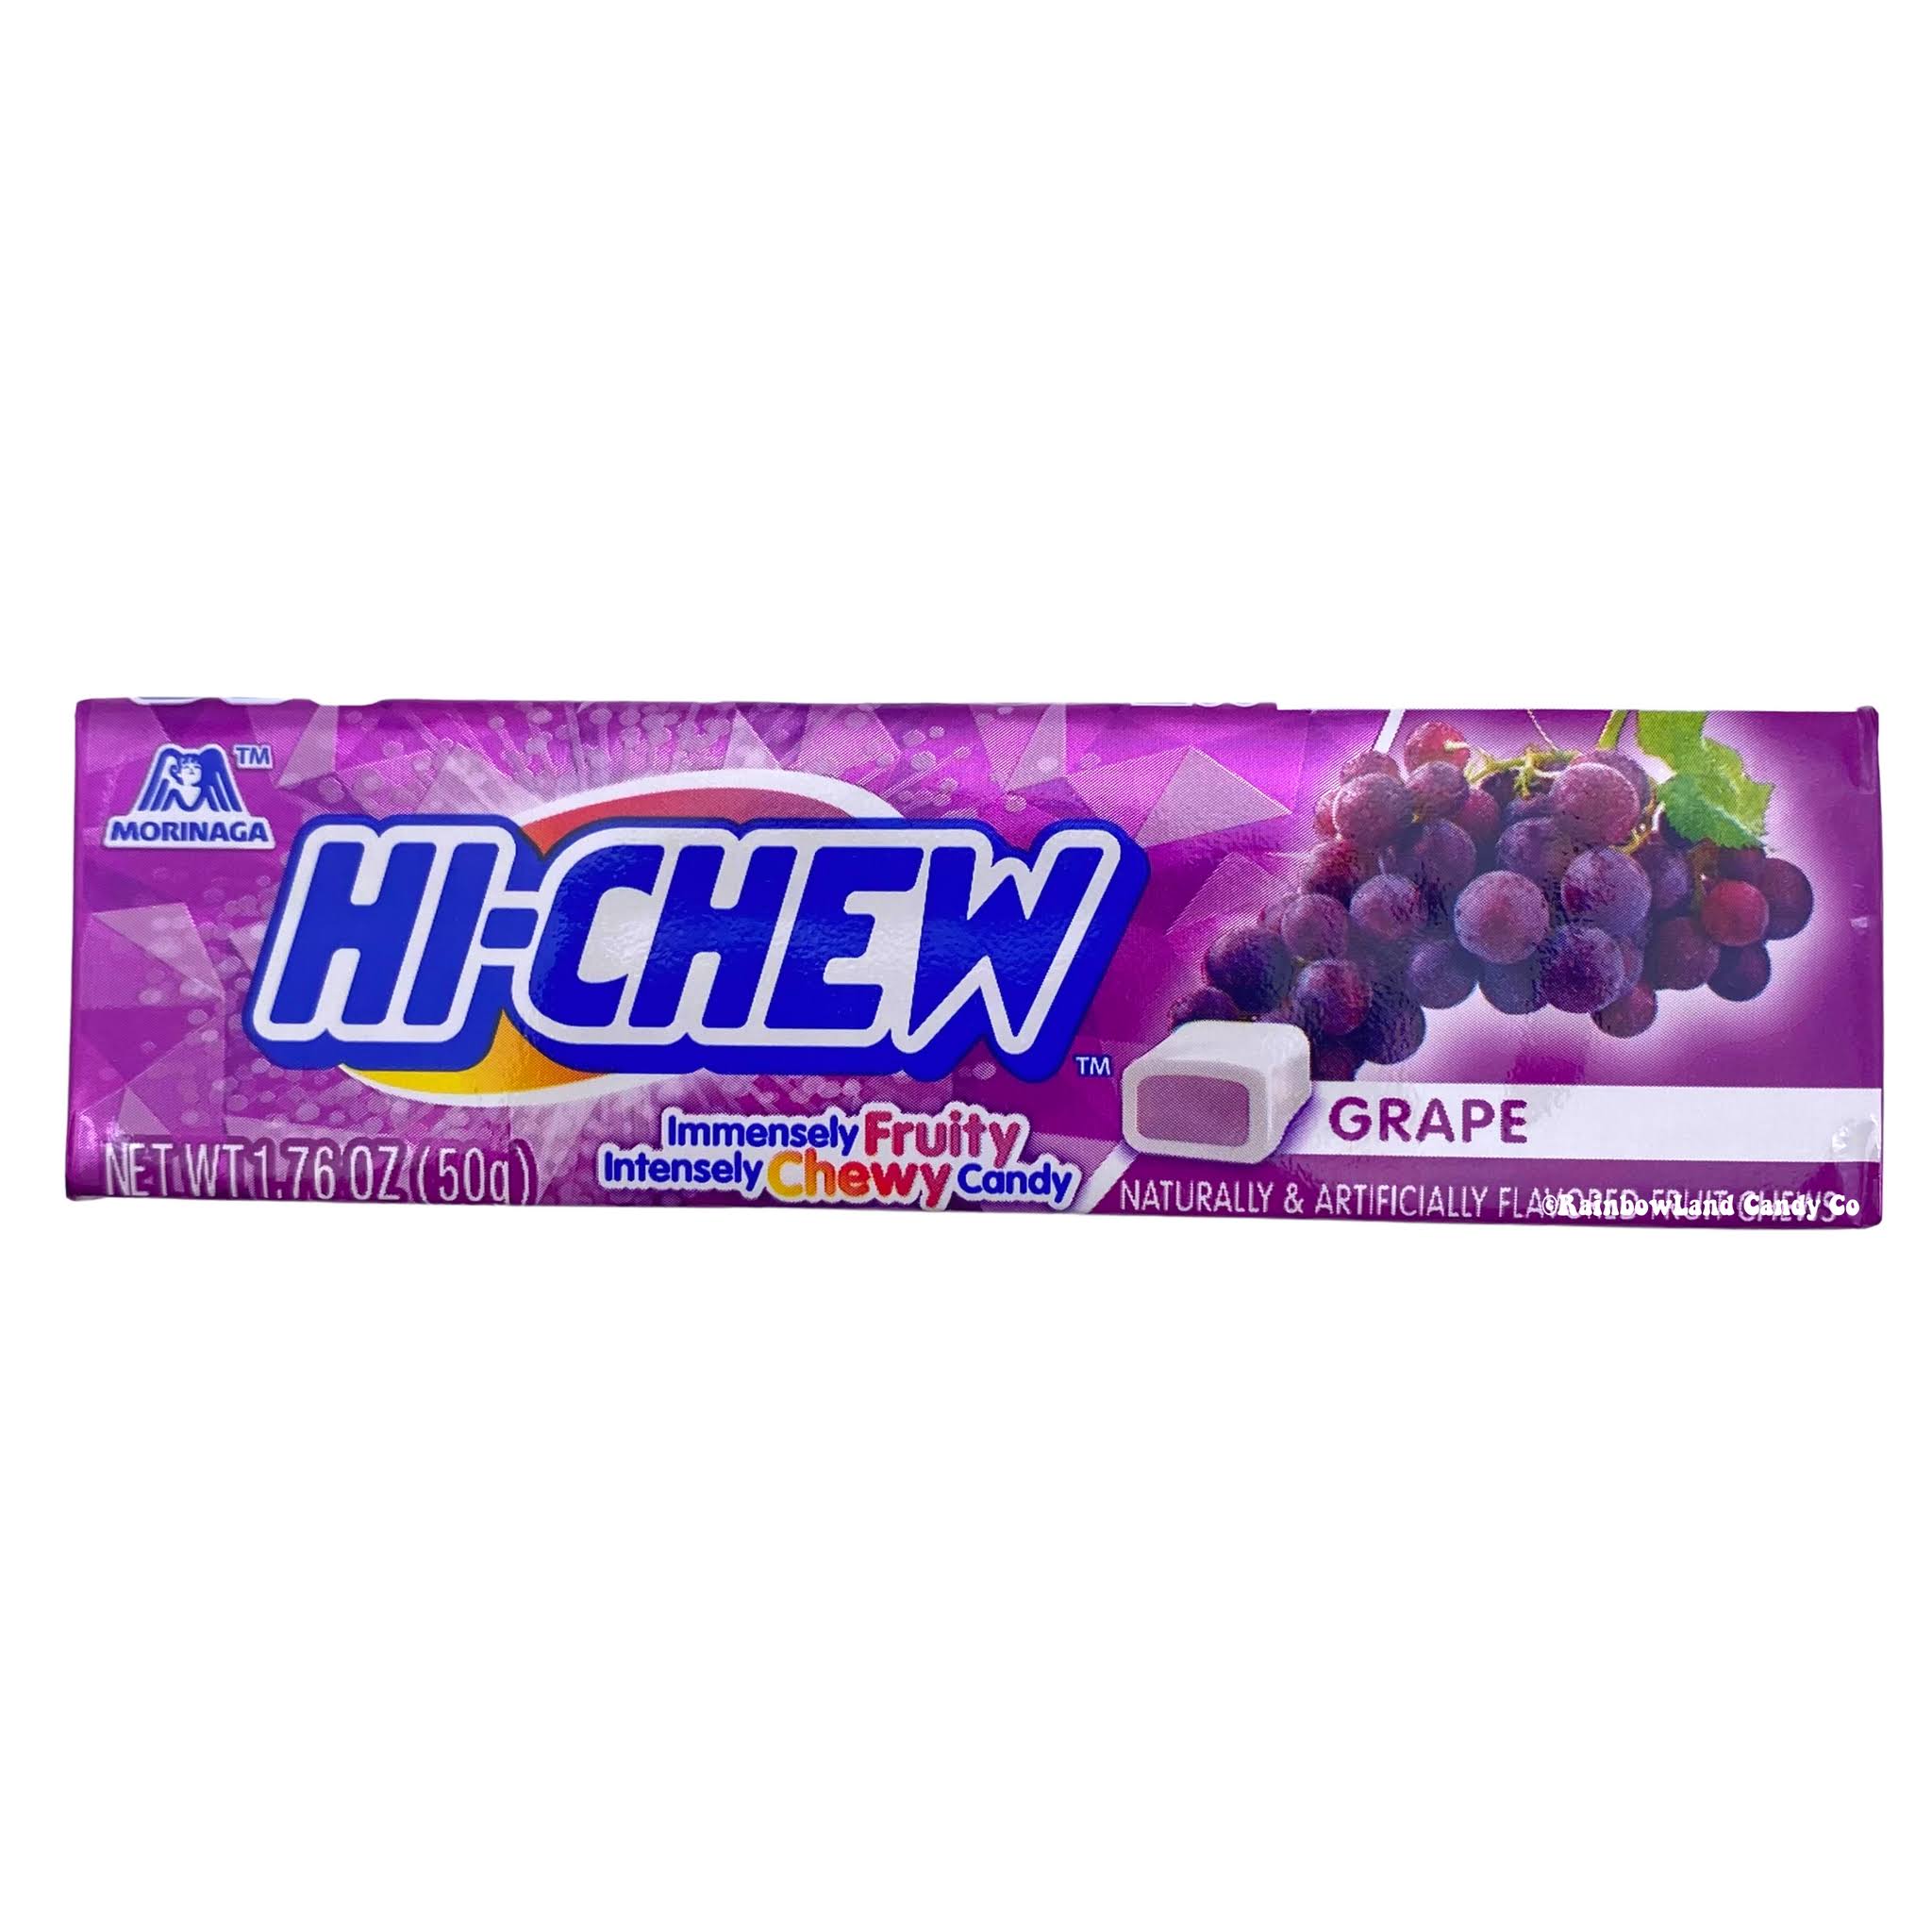 Hi-Chew Fruit Chews - Grape, 50g